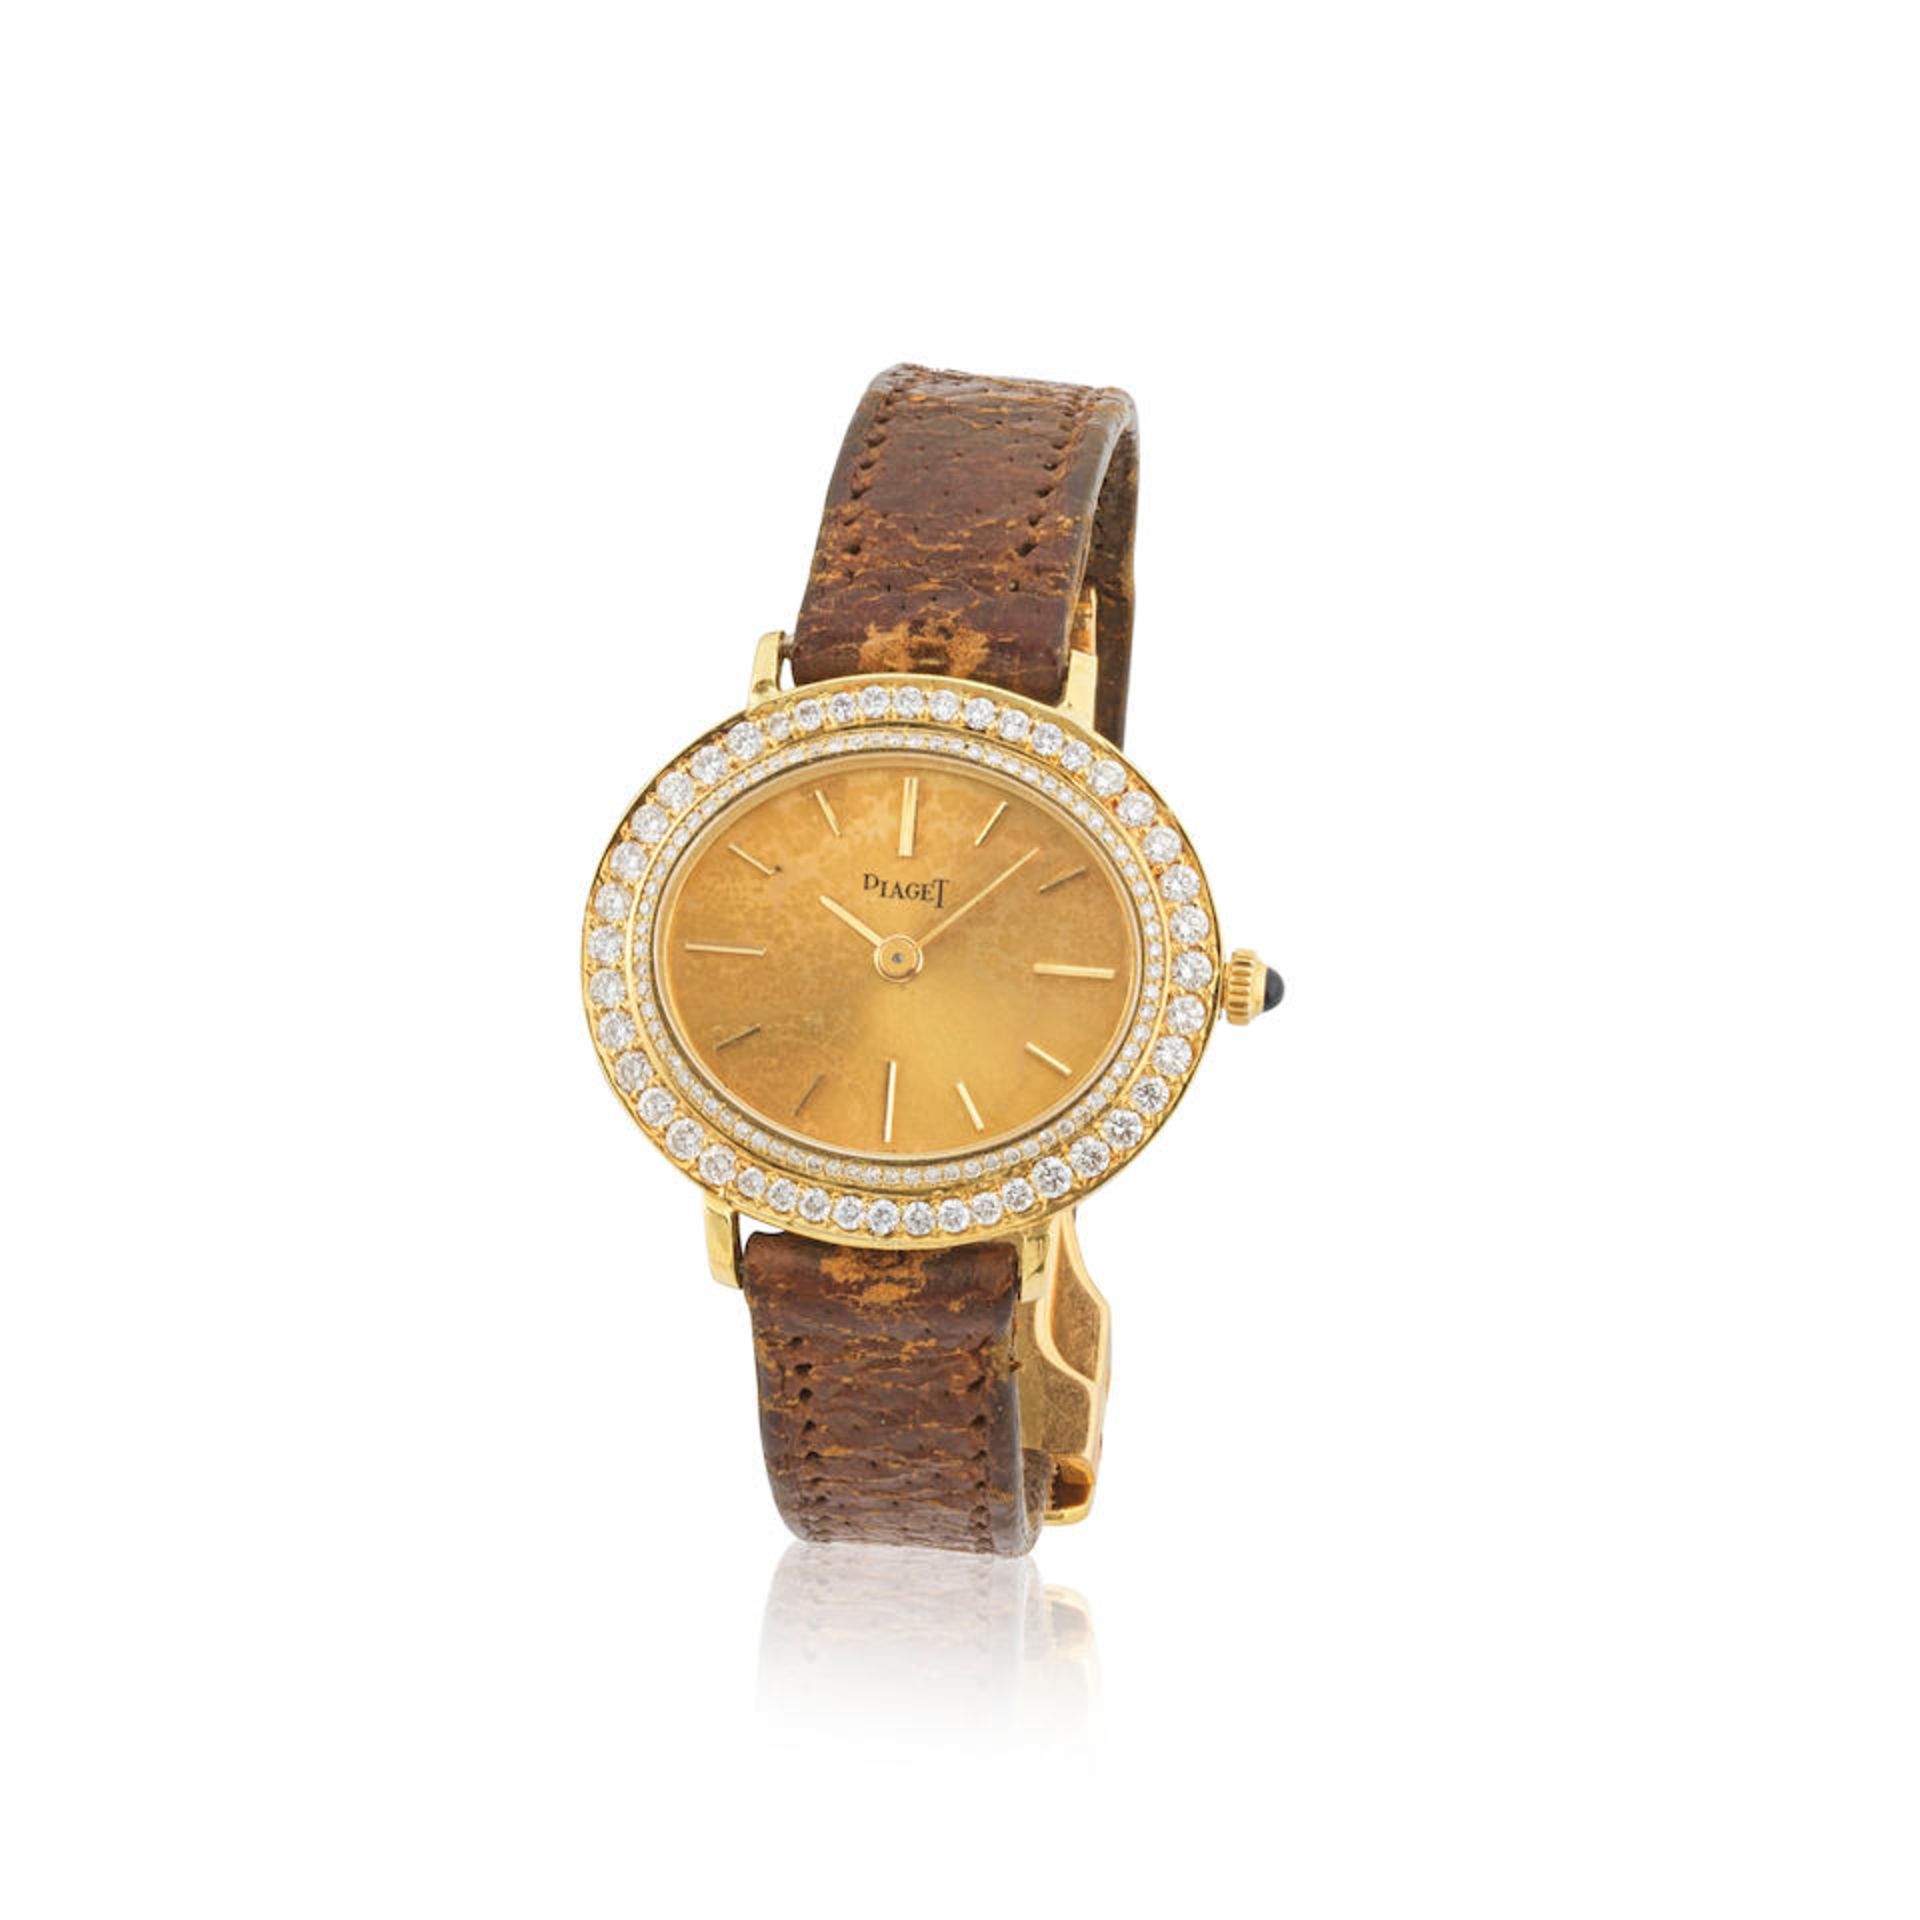 Piaget. A lady's 18K gold manual wind wristwatch with diamond set bezel Piaget. Montre bracelet ...